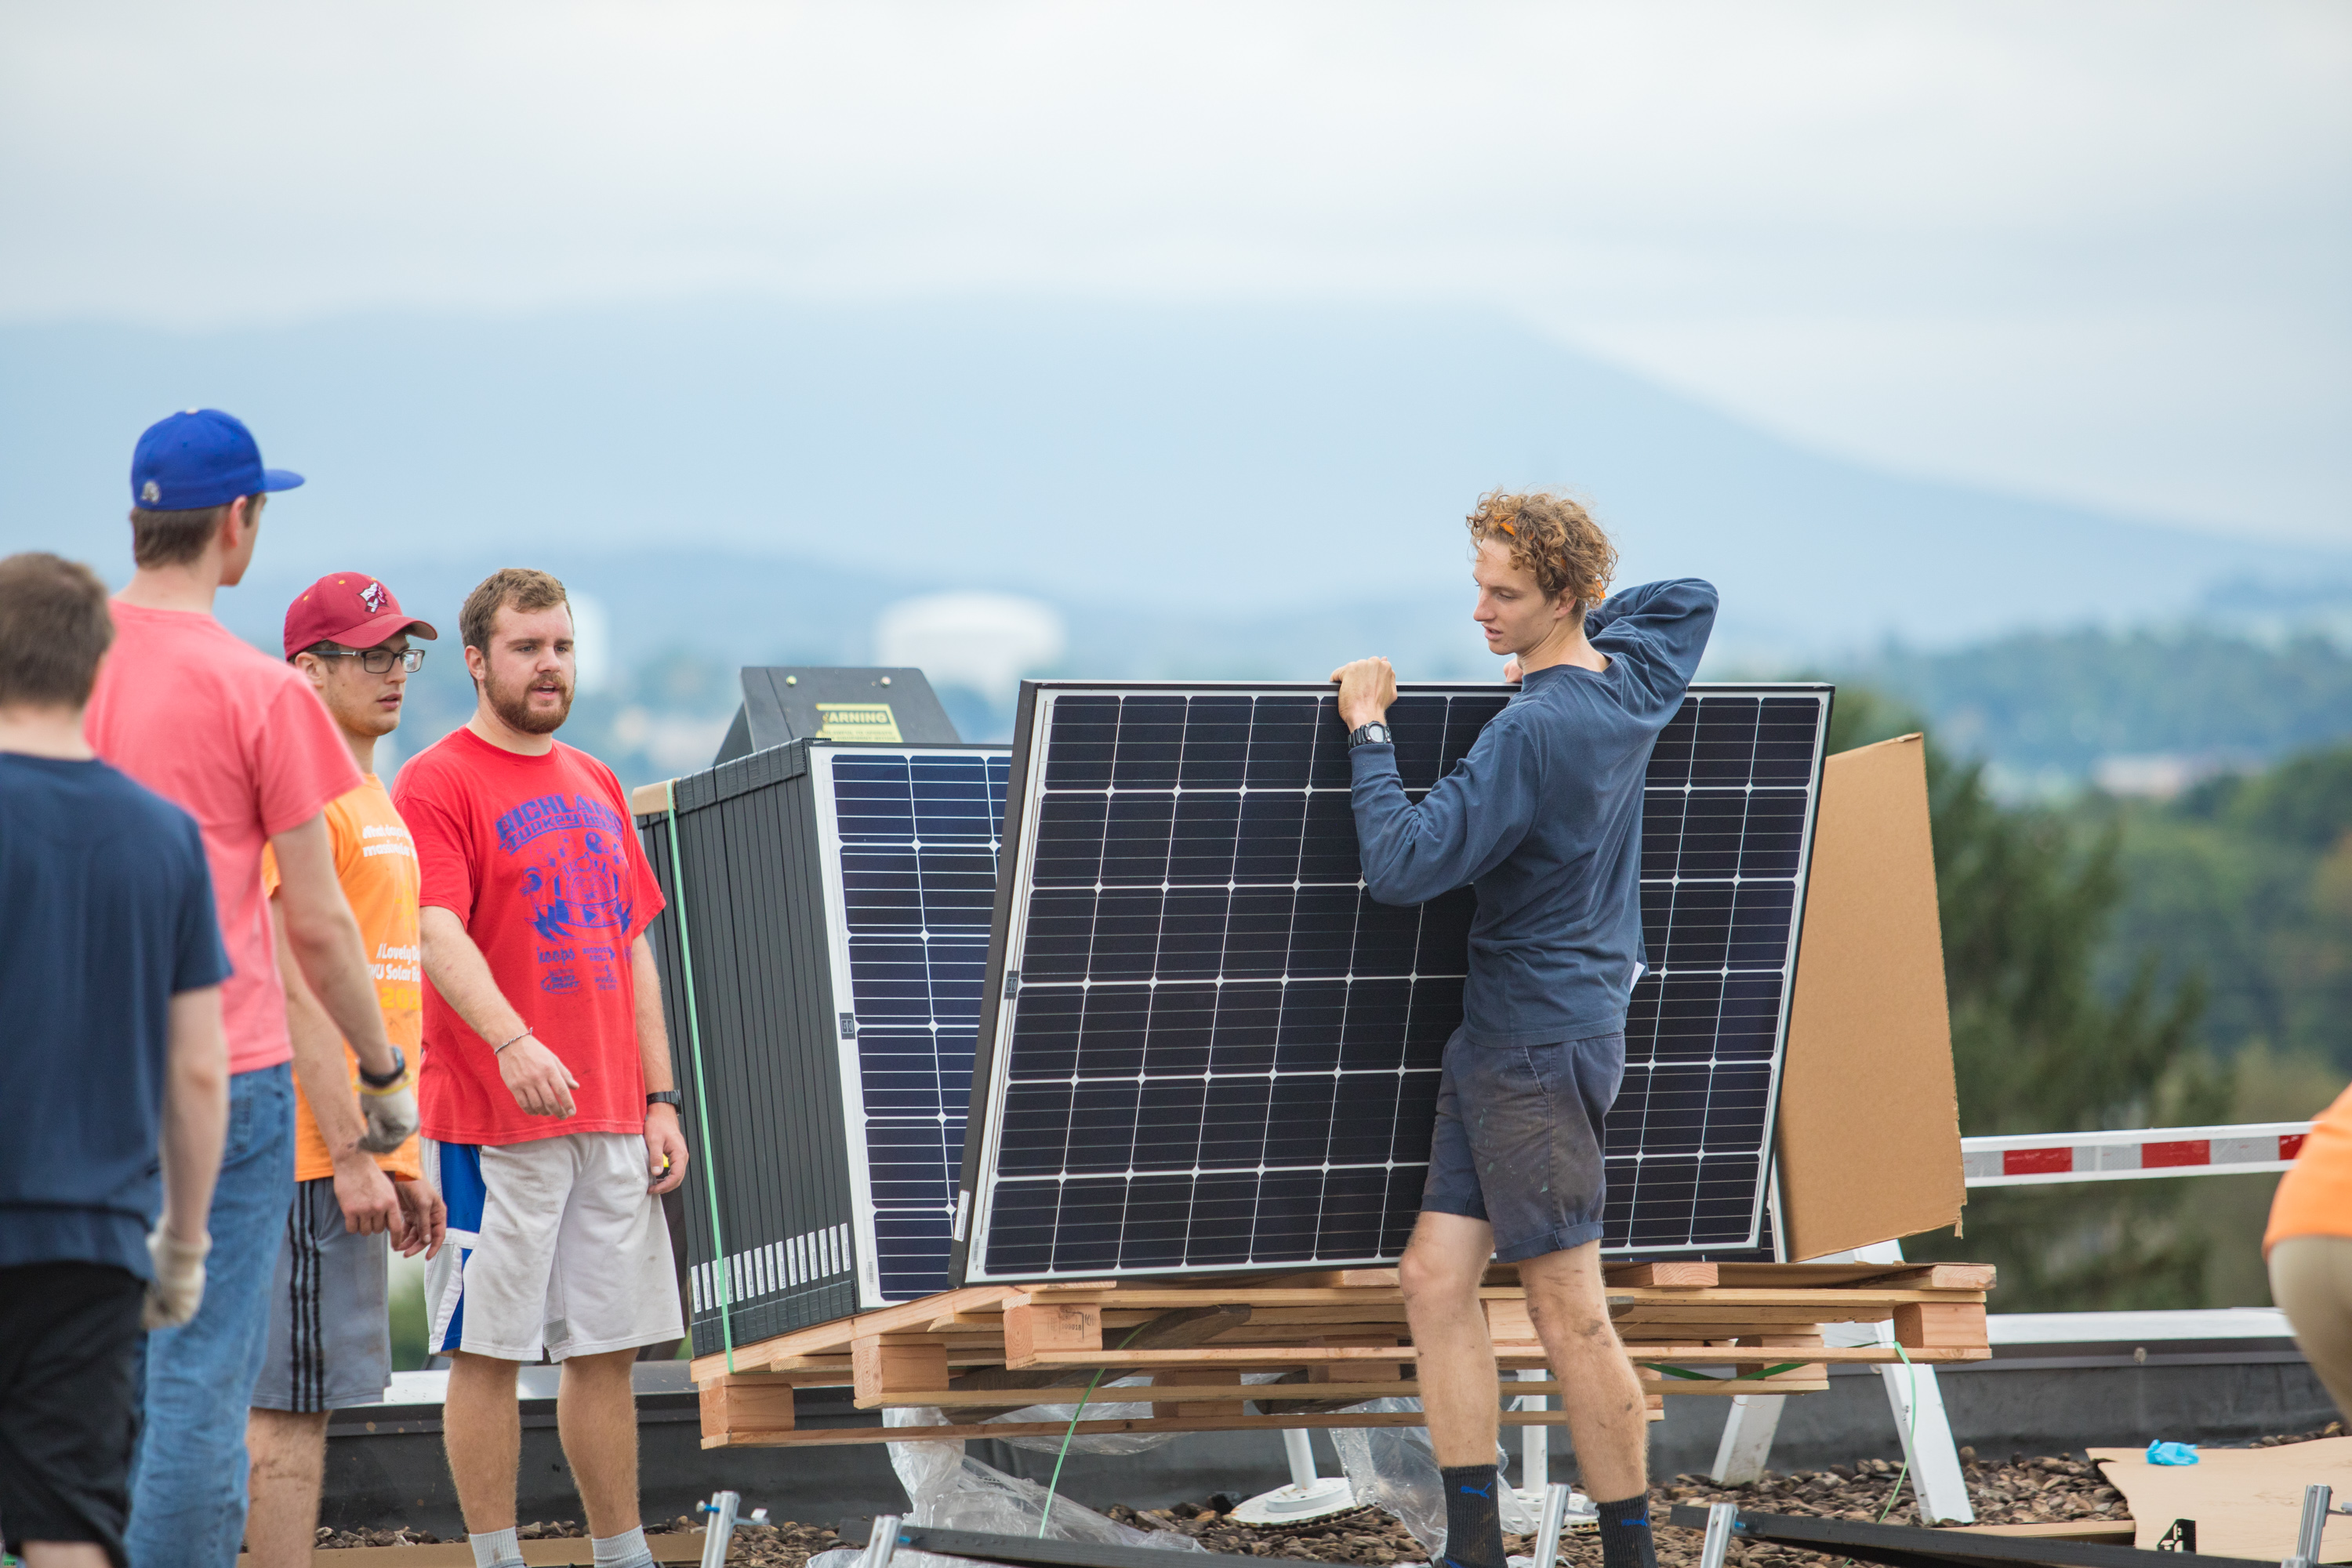 Students installing solar panels